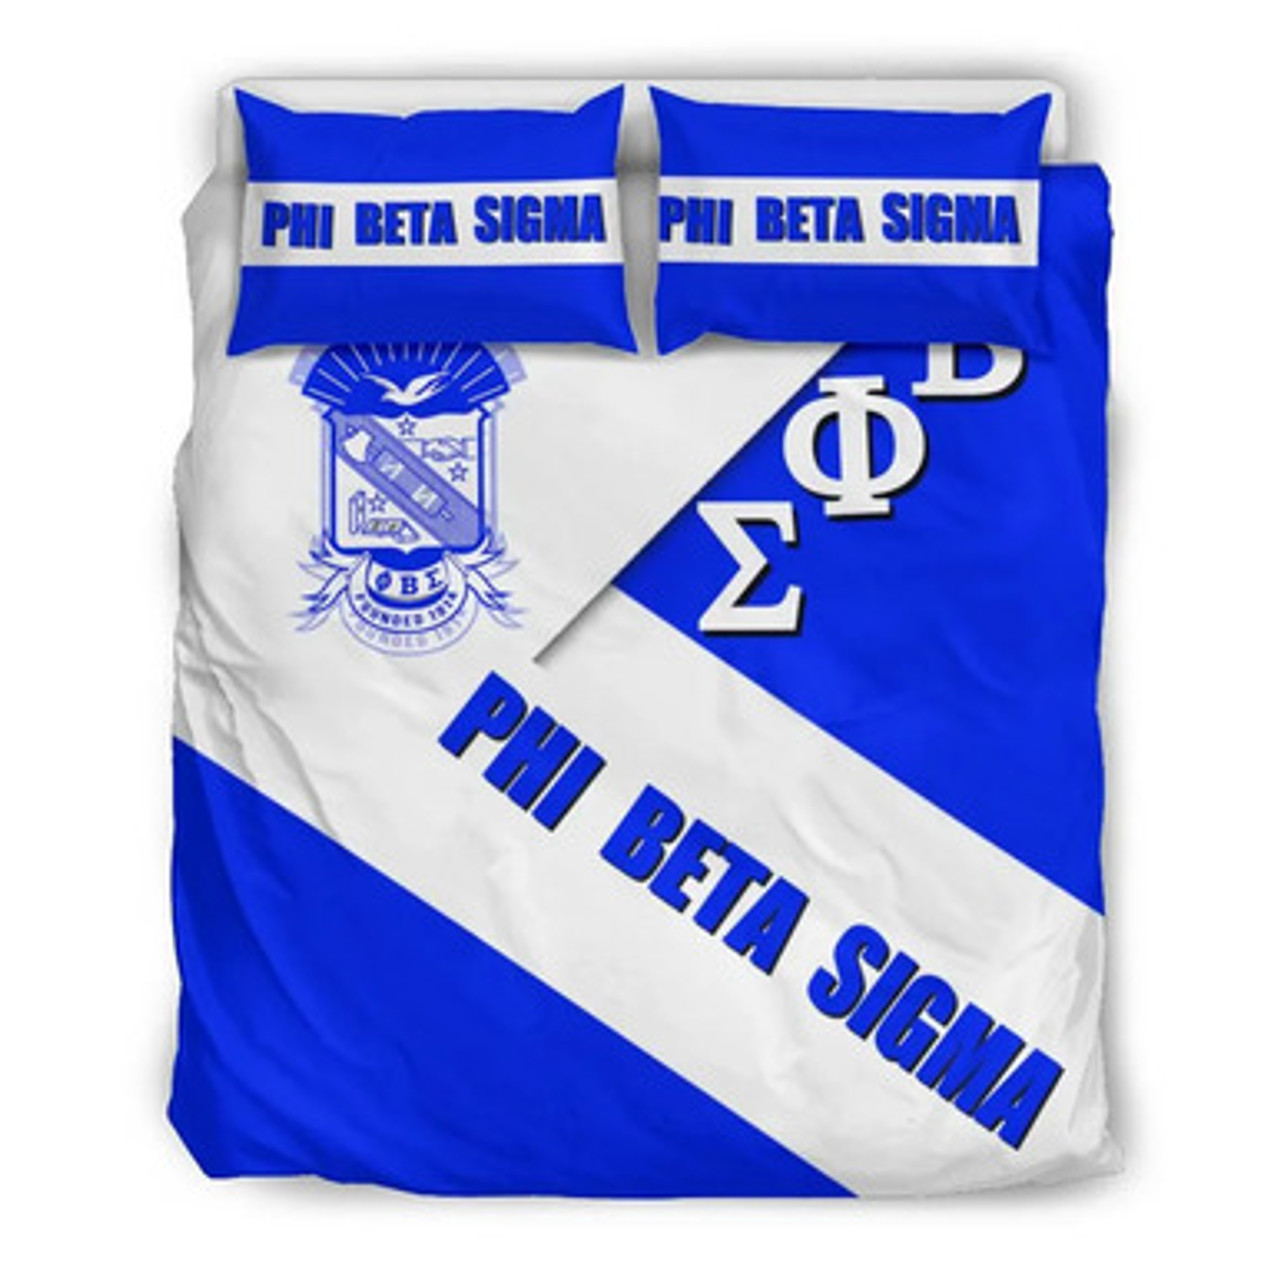 Phi Beta Sigma Bedding Set - Fraternity In Me Bedding Set